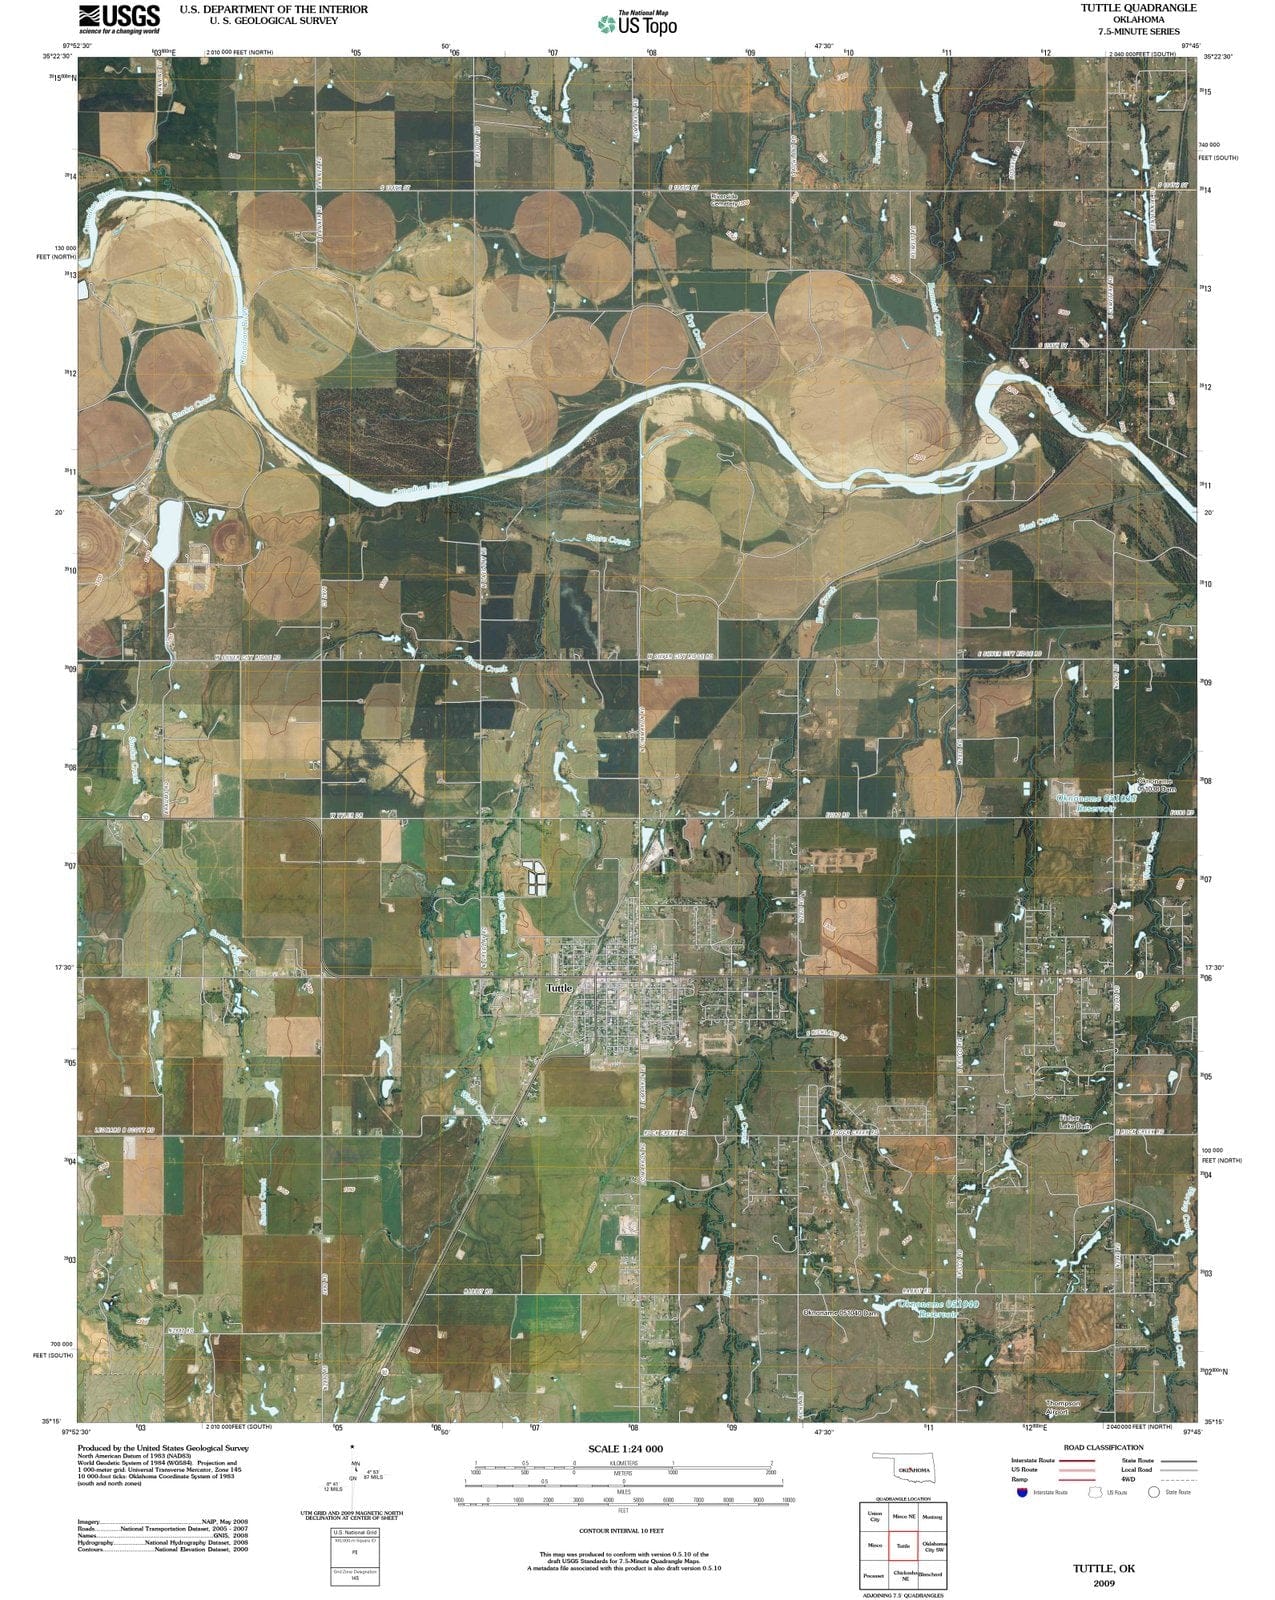 2009 Tuttle, OK - Oklahoma - USGS Topographic Map